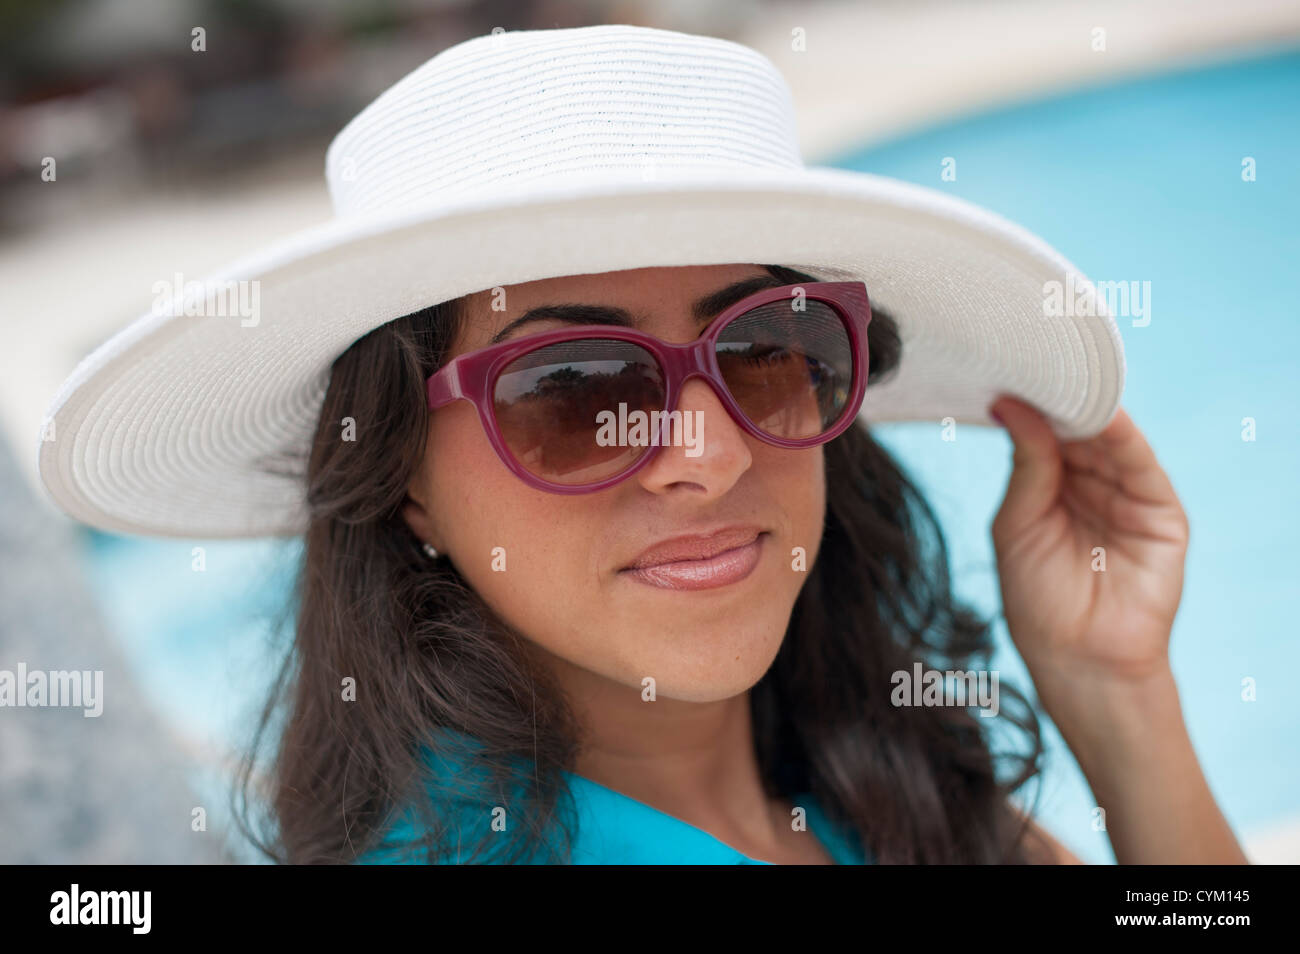 Smiling woman wearing sunhat outdoors Stock Photo